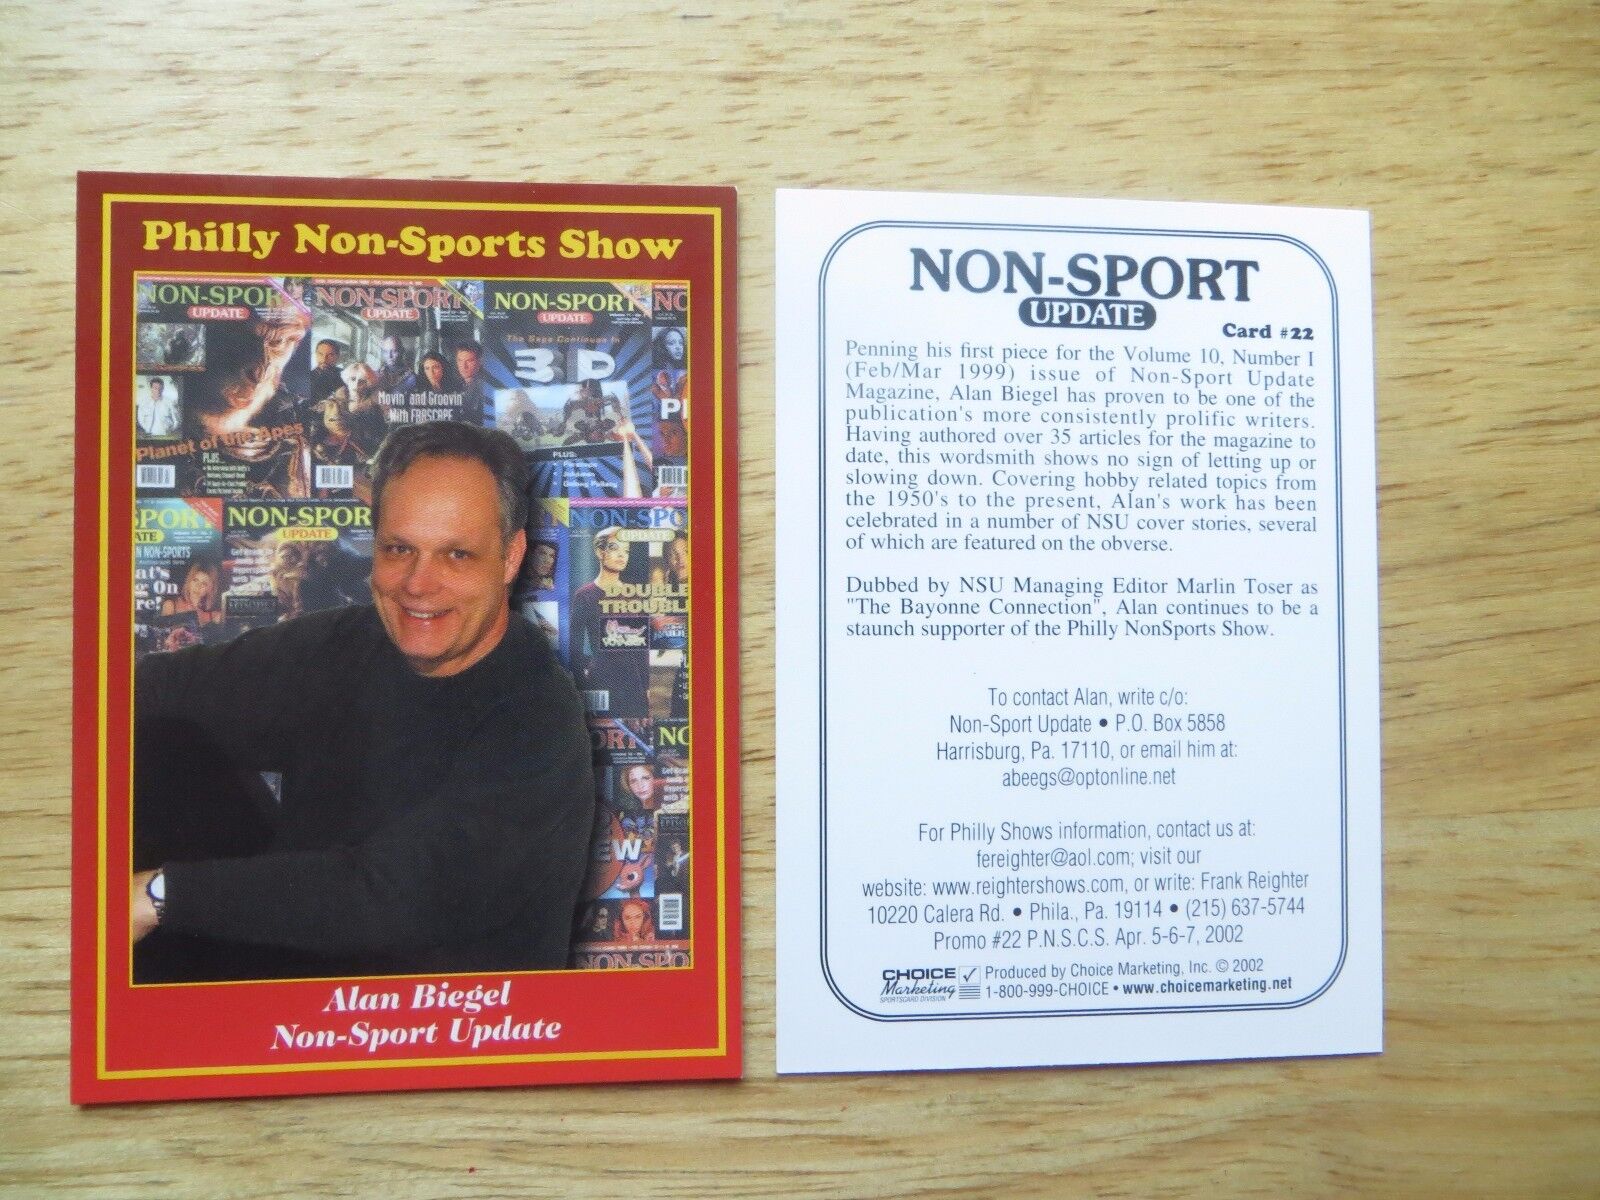 2002 PHILLY NON-SPORTS CARD SHOW PROMO # 22 ALAN BIEGEL, NON-SPORT UPDATE, NSU